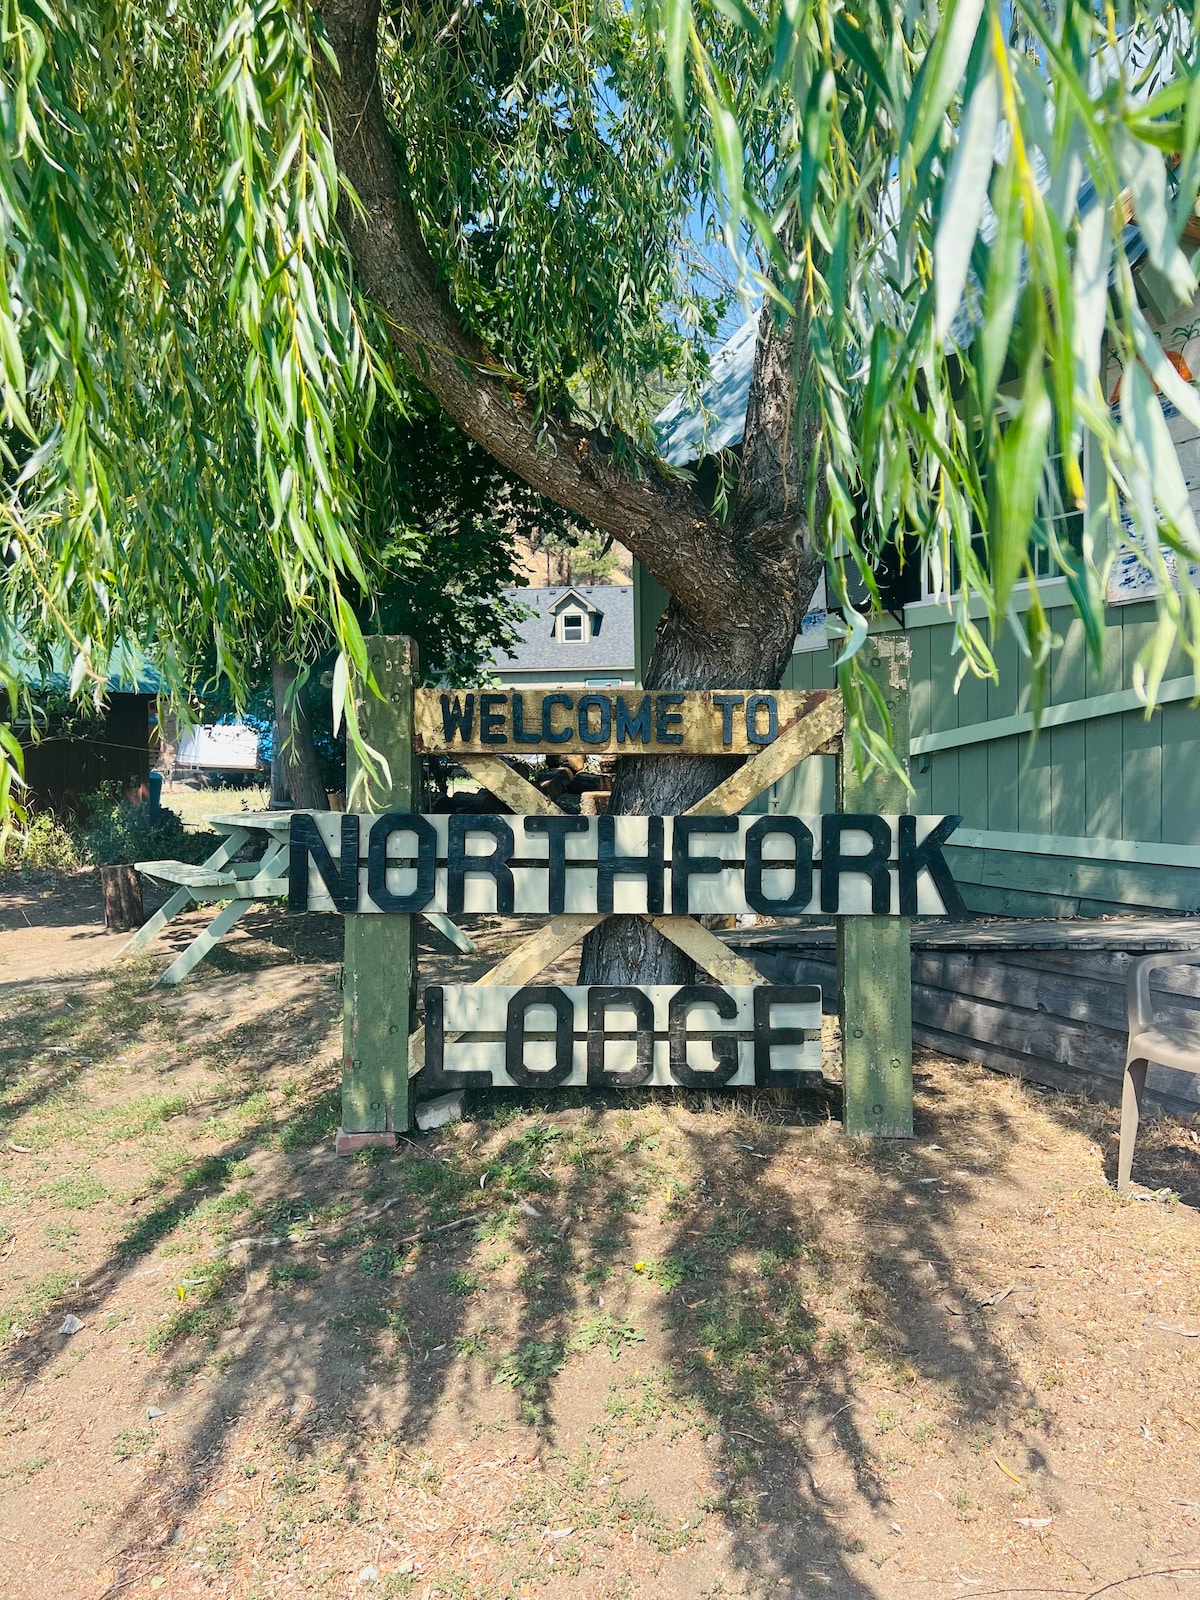 NorthFork Lodge Cabin #3 “The Maple”